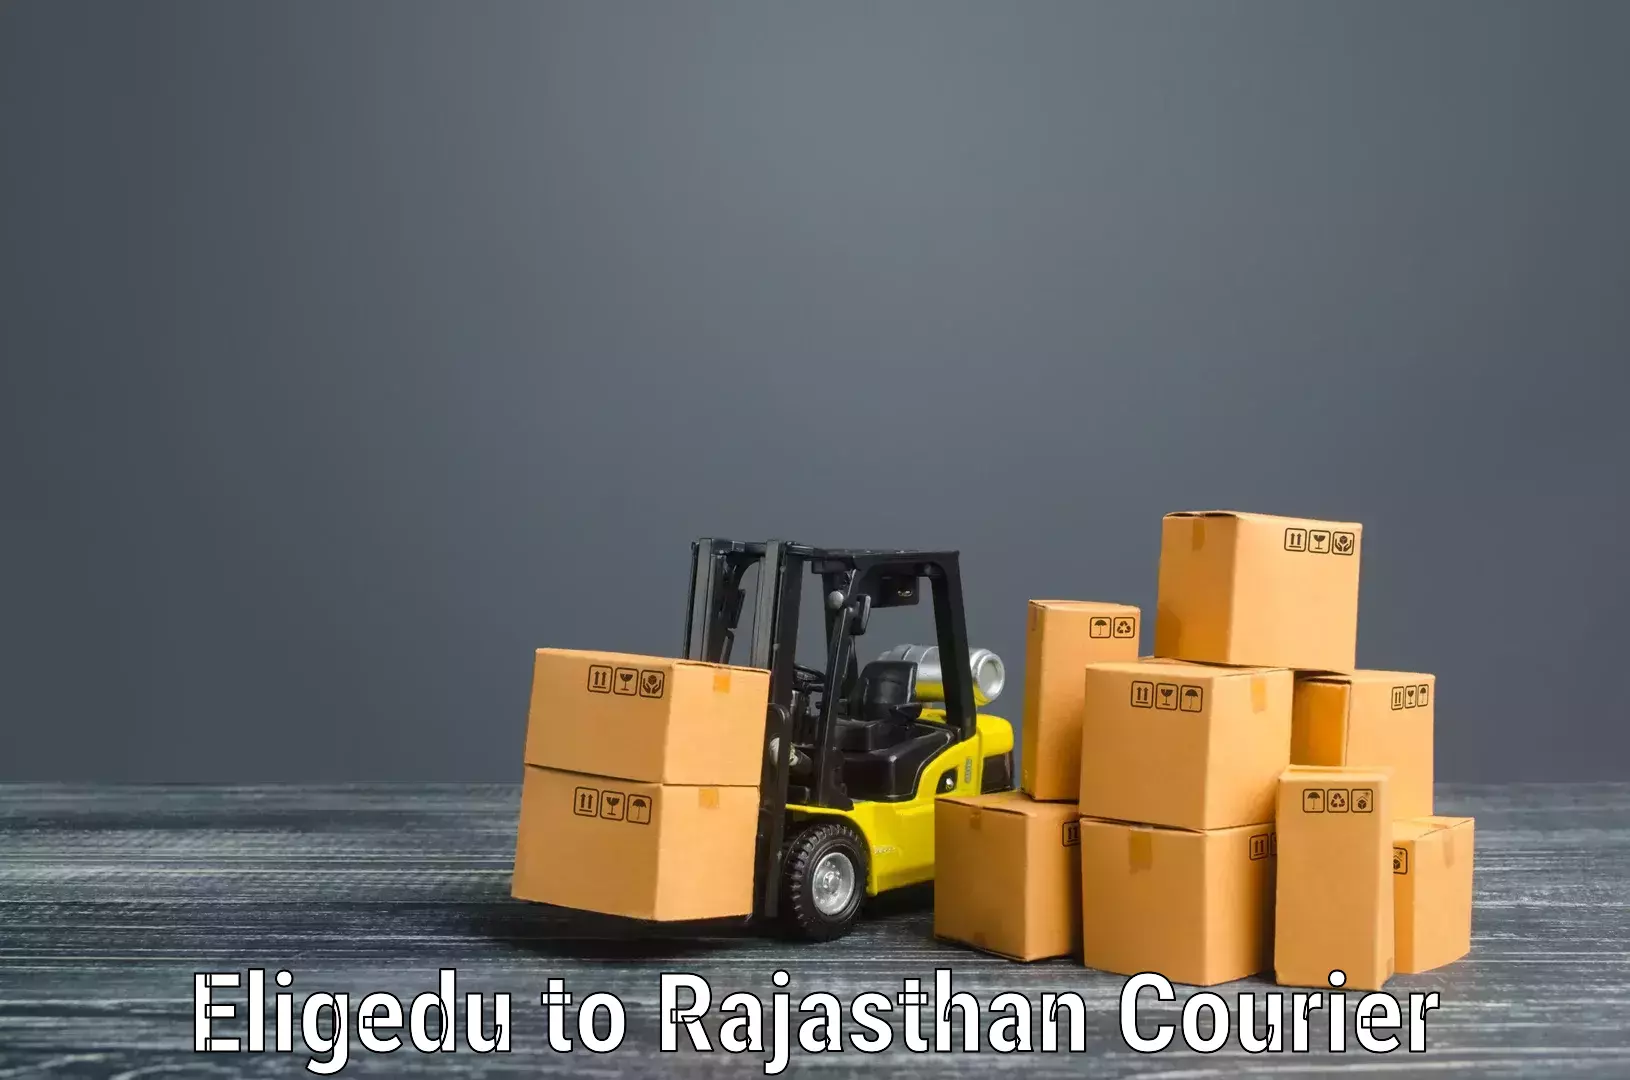 Reliable movers Eligedu to Raisingh Nagar